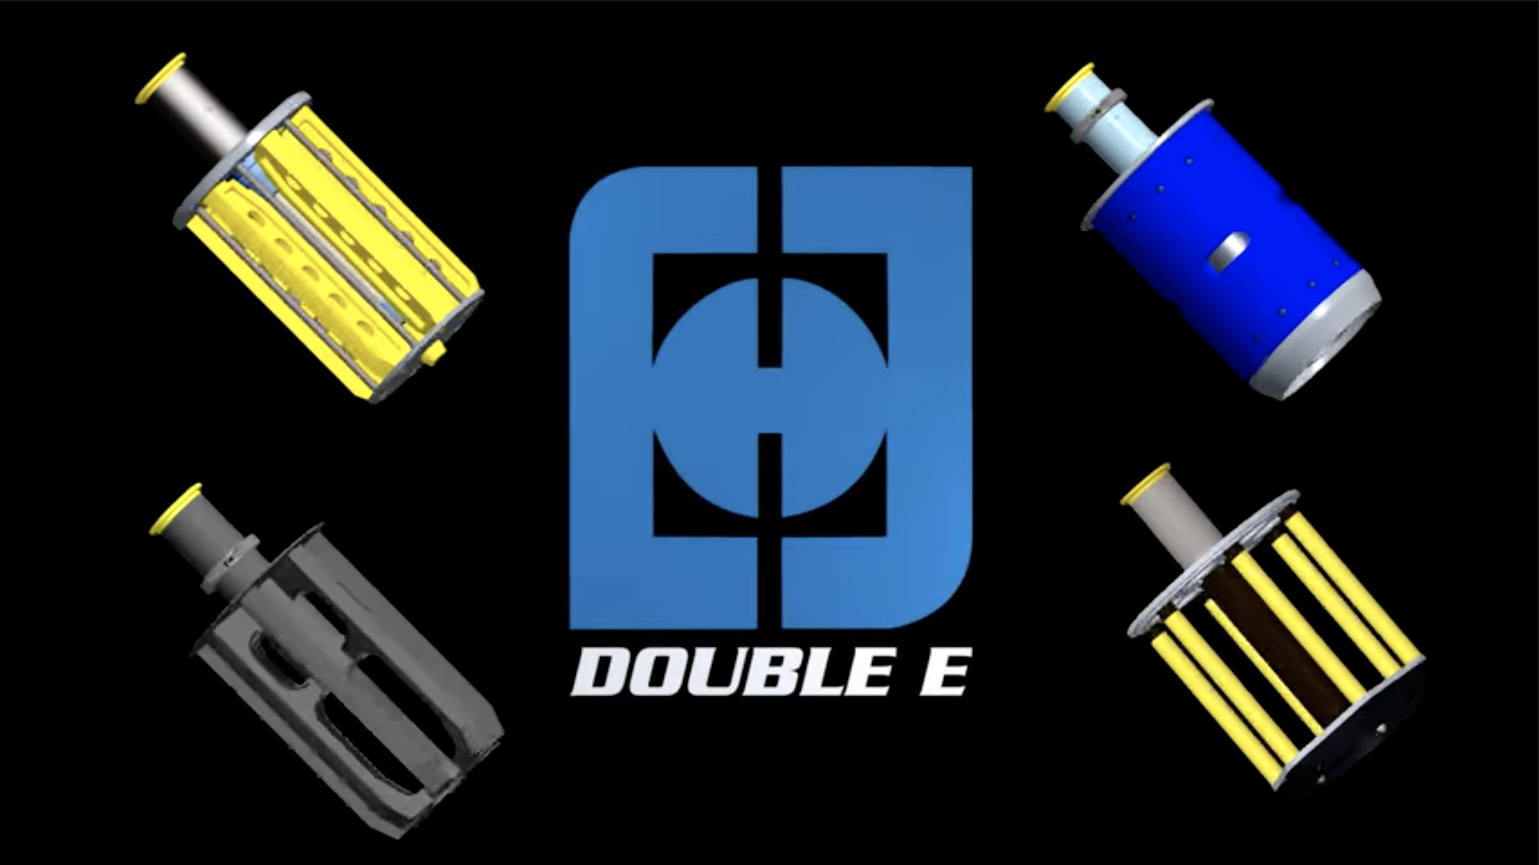 Double E Core Plug Overview